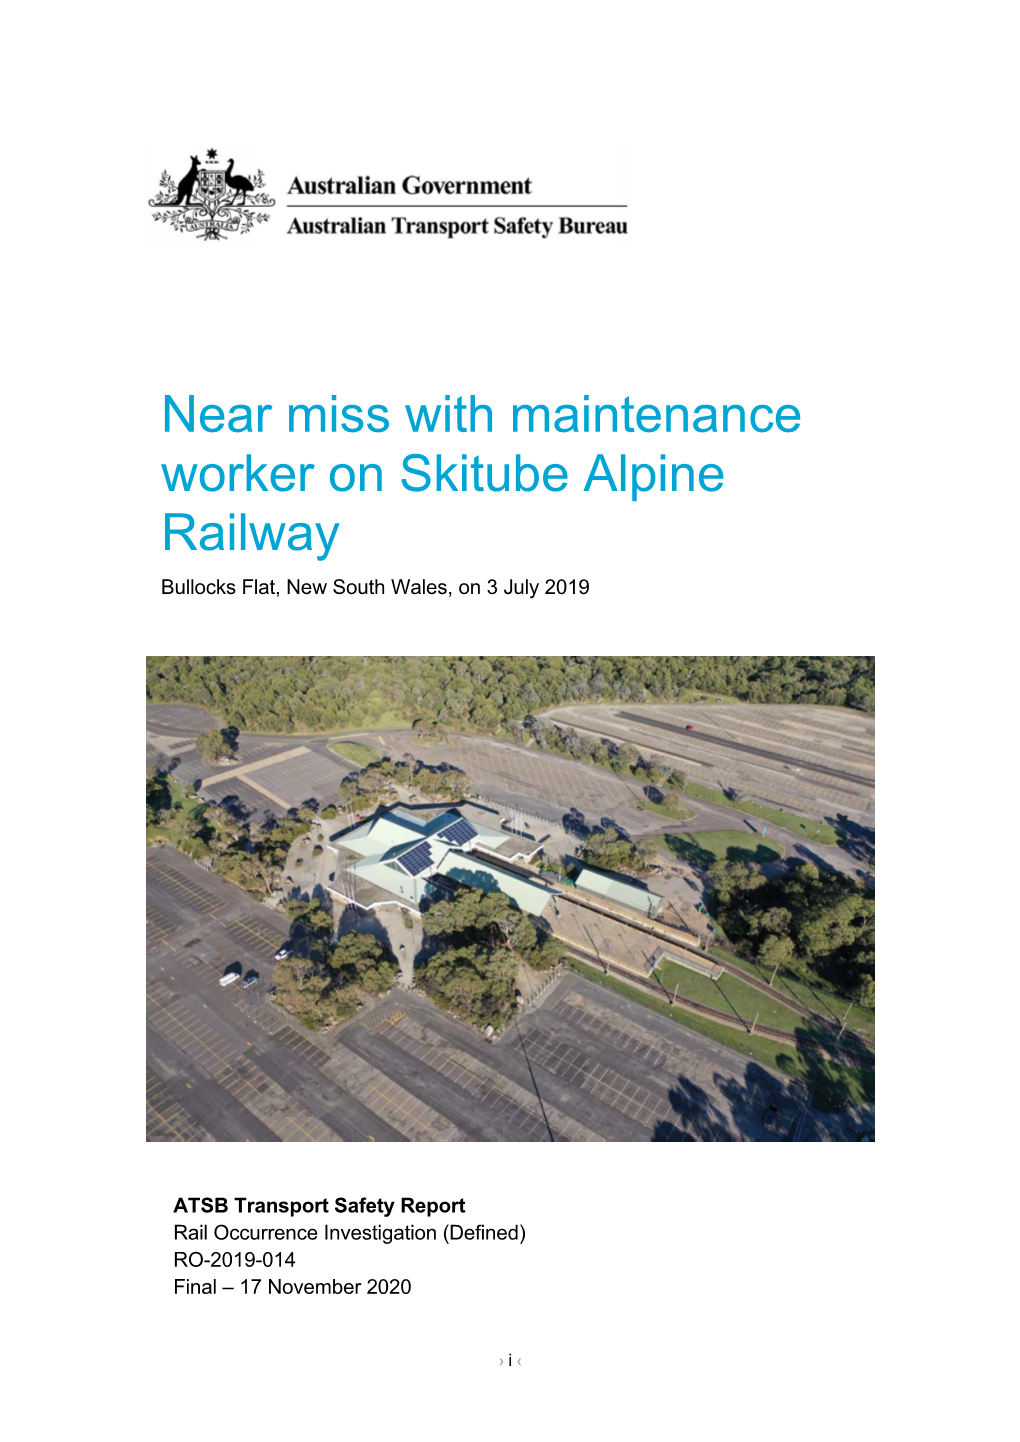 Near Miss with Maintenance Worker on Skitube Alpine Railway Bullocks Flat, New South Wales, on 3 July 2019